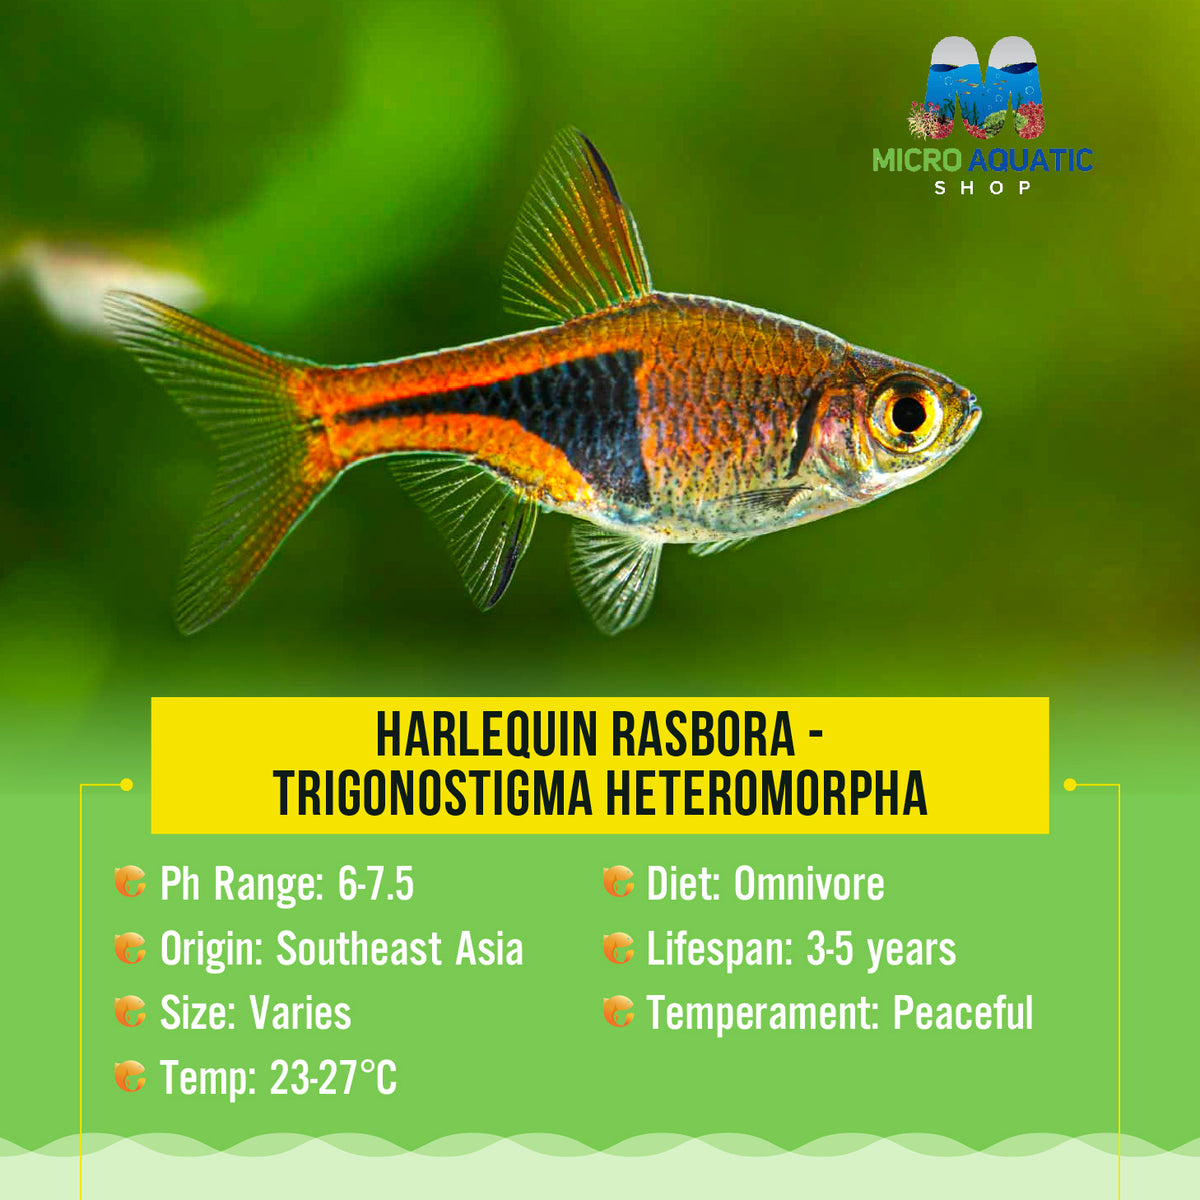 Harlequin Rasbora - Trigonostigma heteromorpha